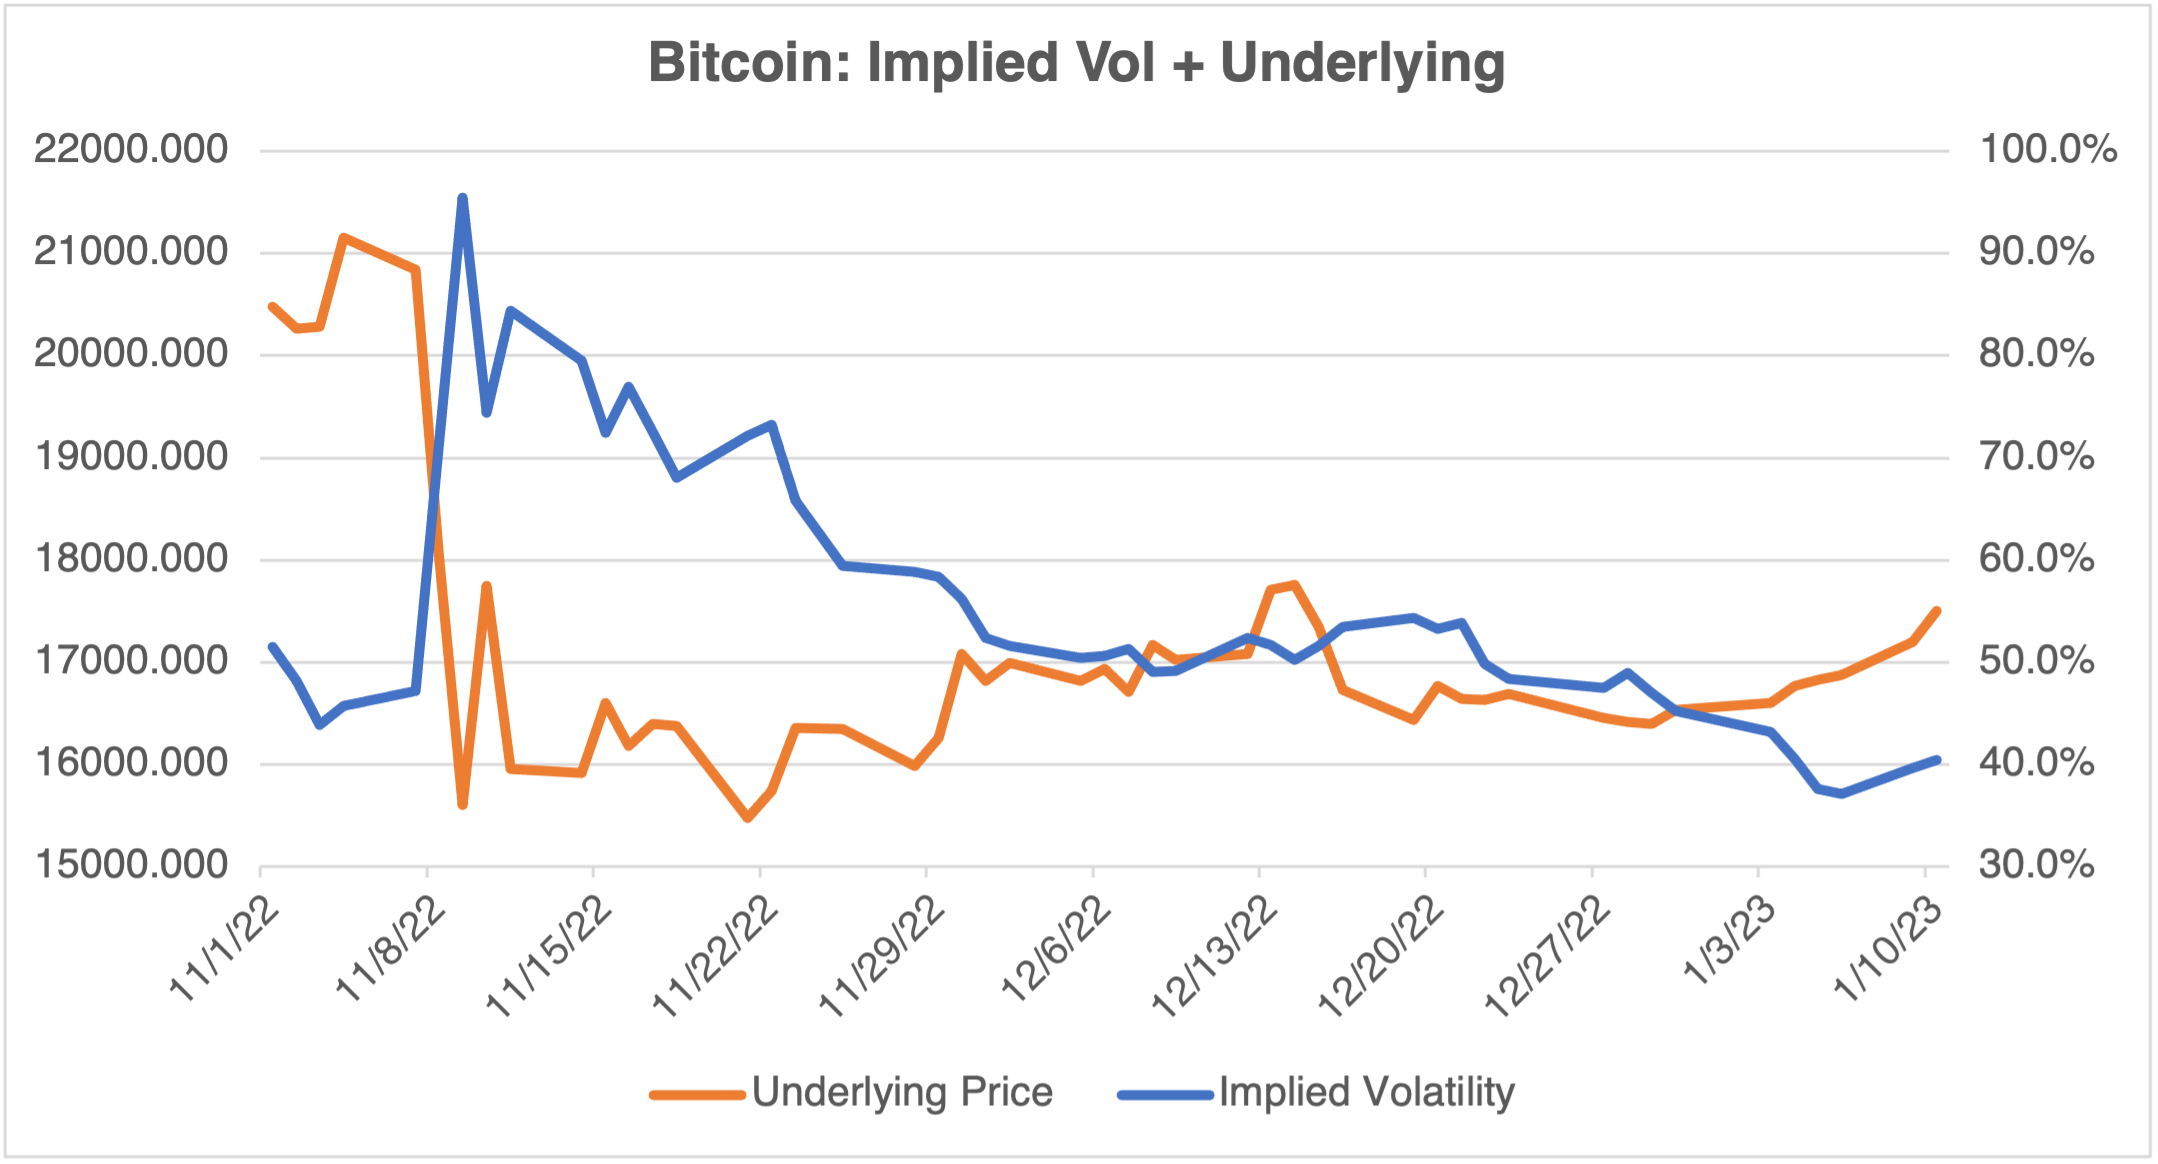 Bitcoin Implied Vol + Underlying Chart